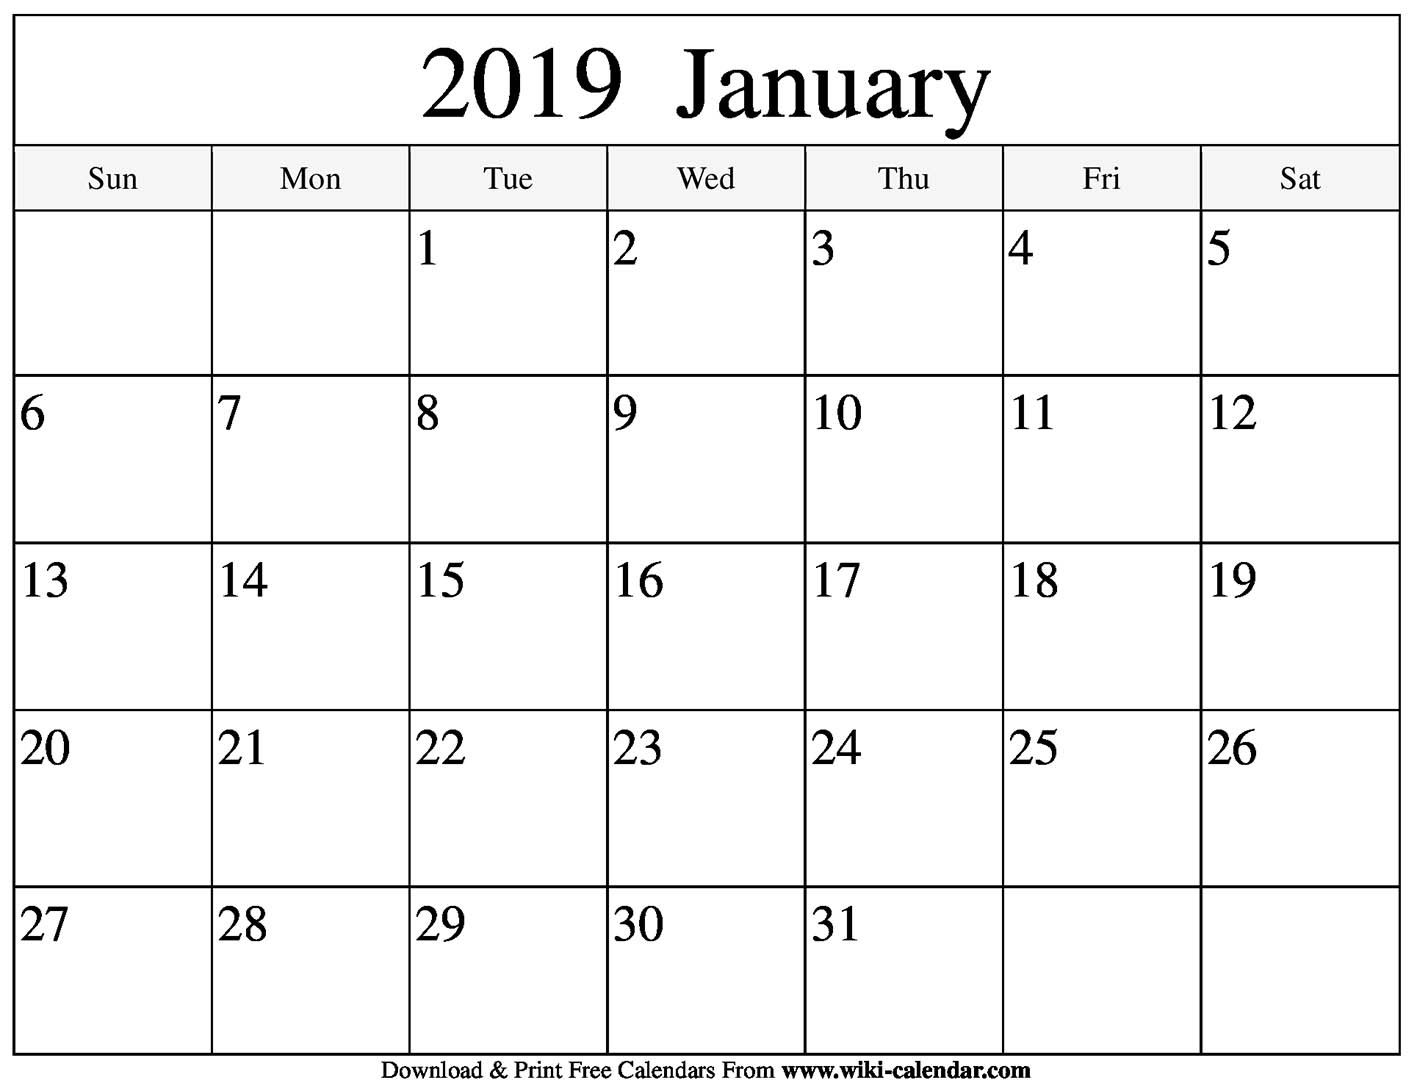 january-2019-calendar-printable